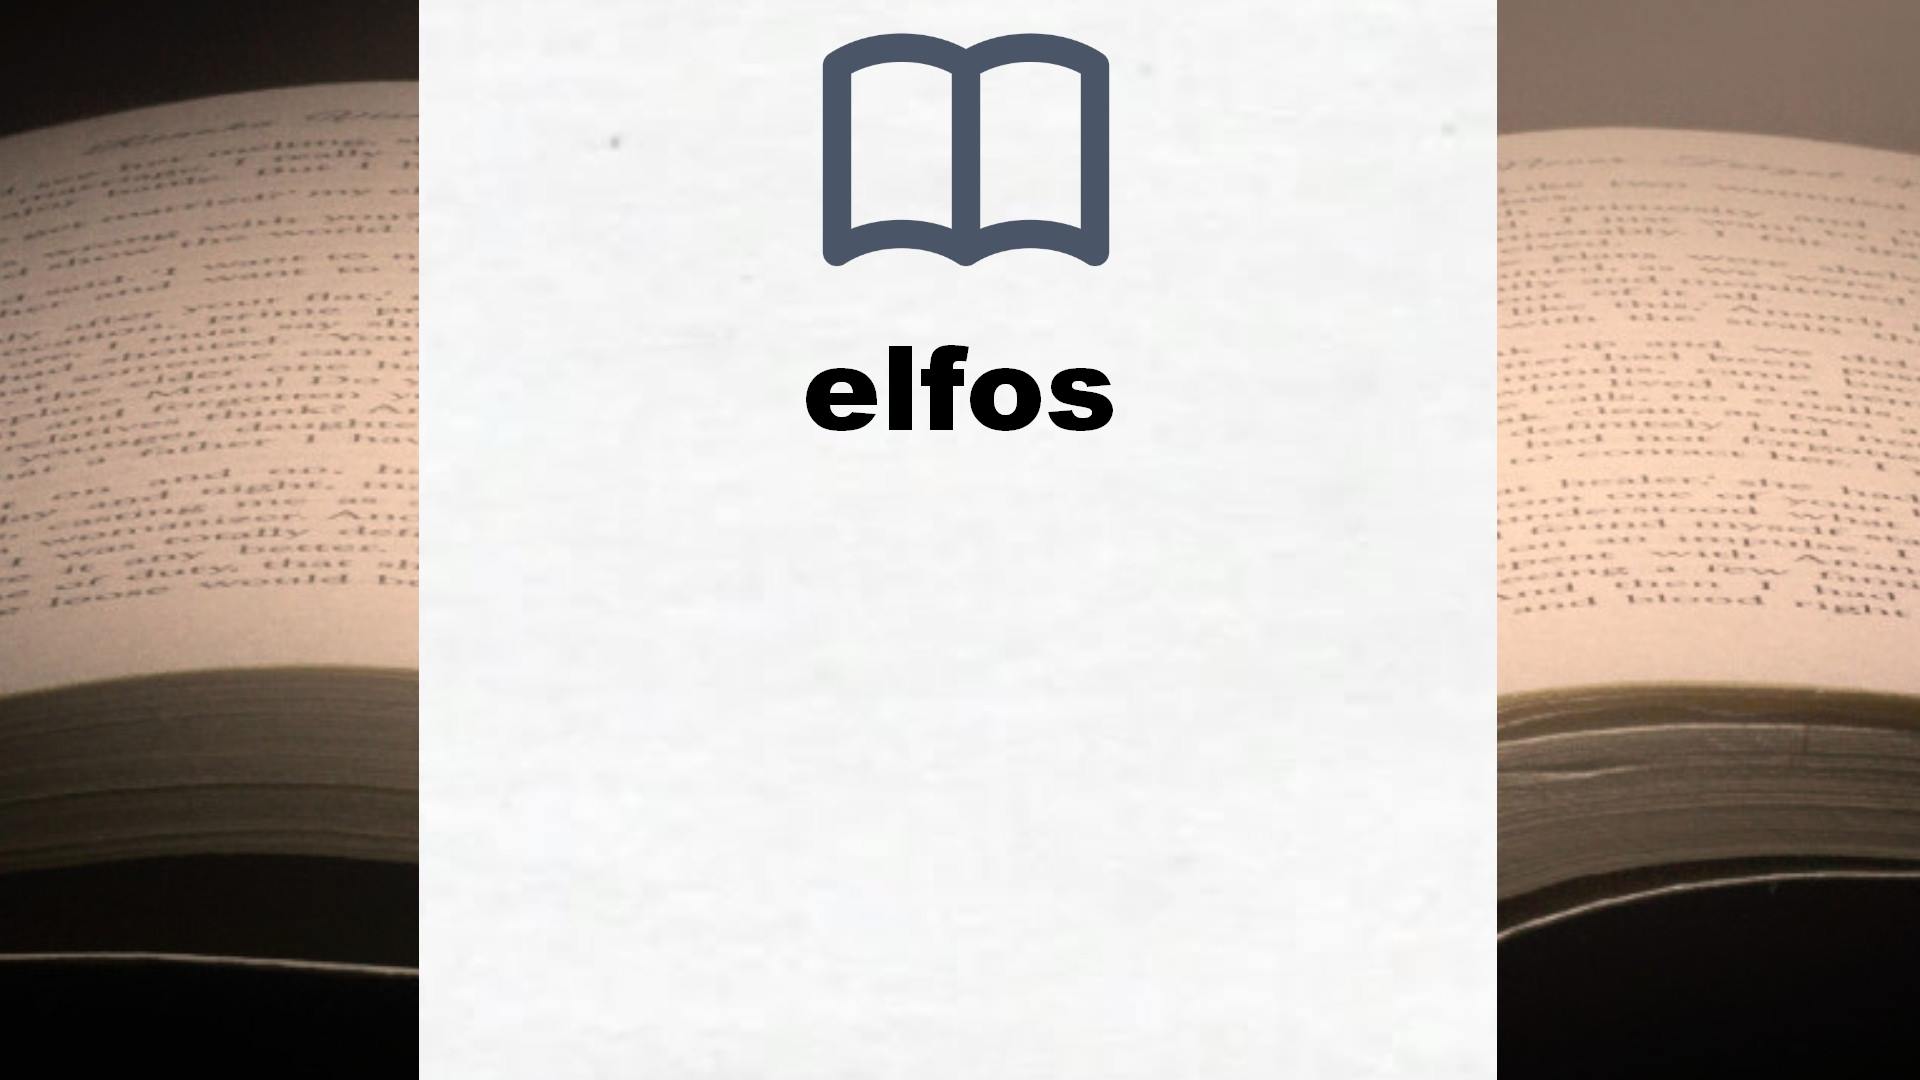 Libros sobre elfos